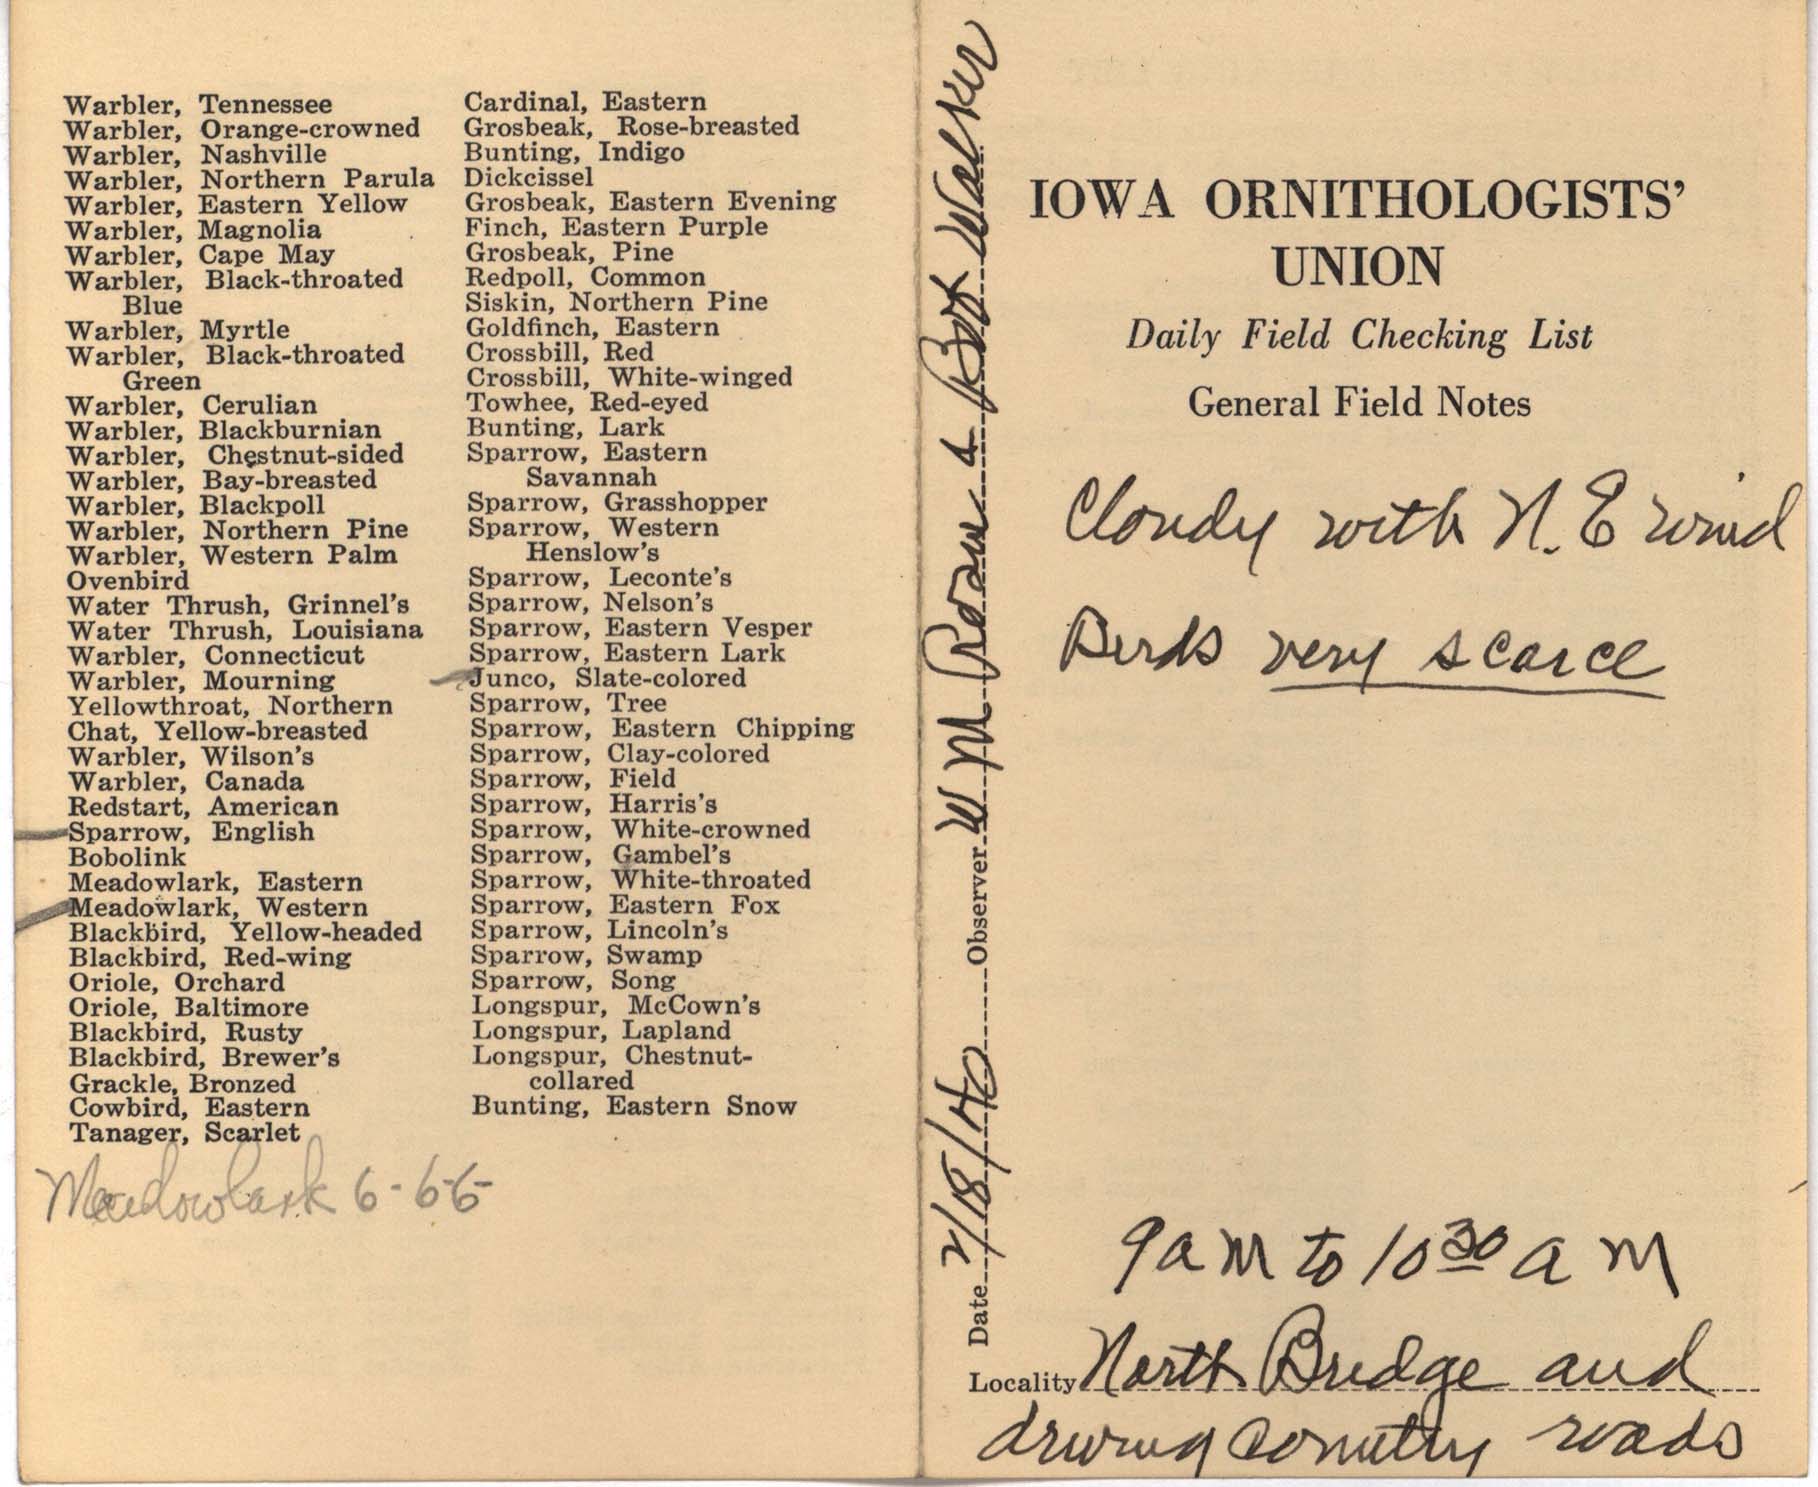 Daily field checking list by Walter Rosene, February 18, 1940